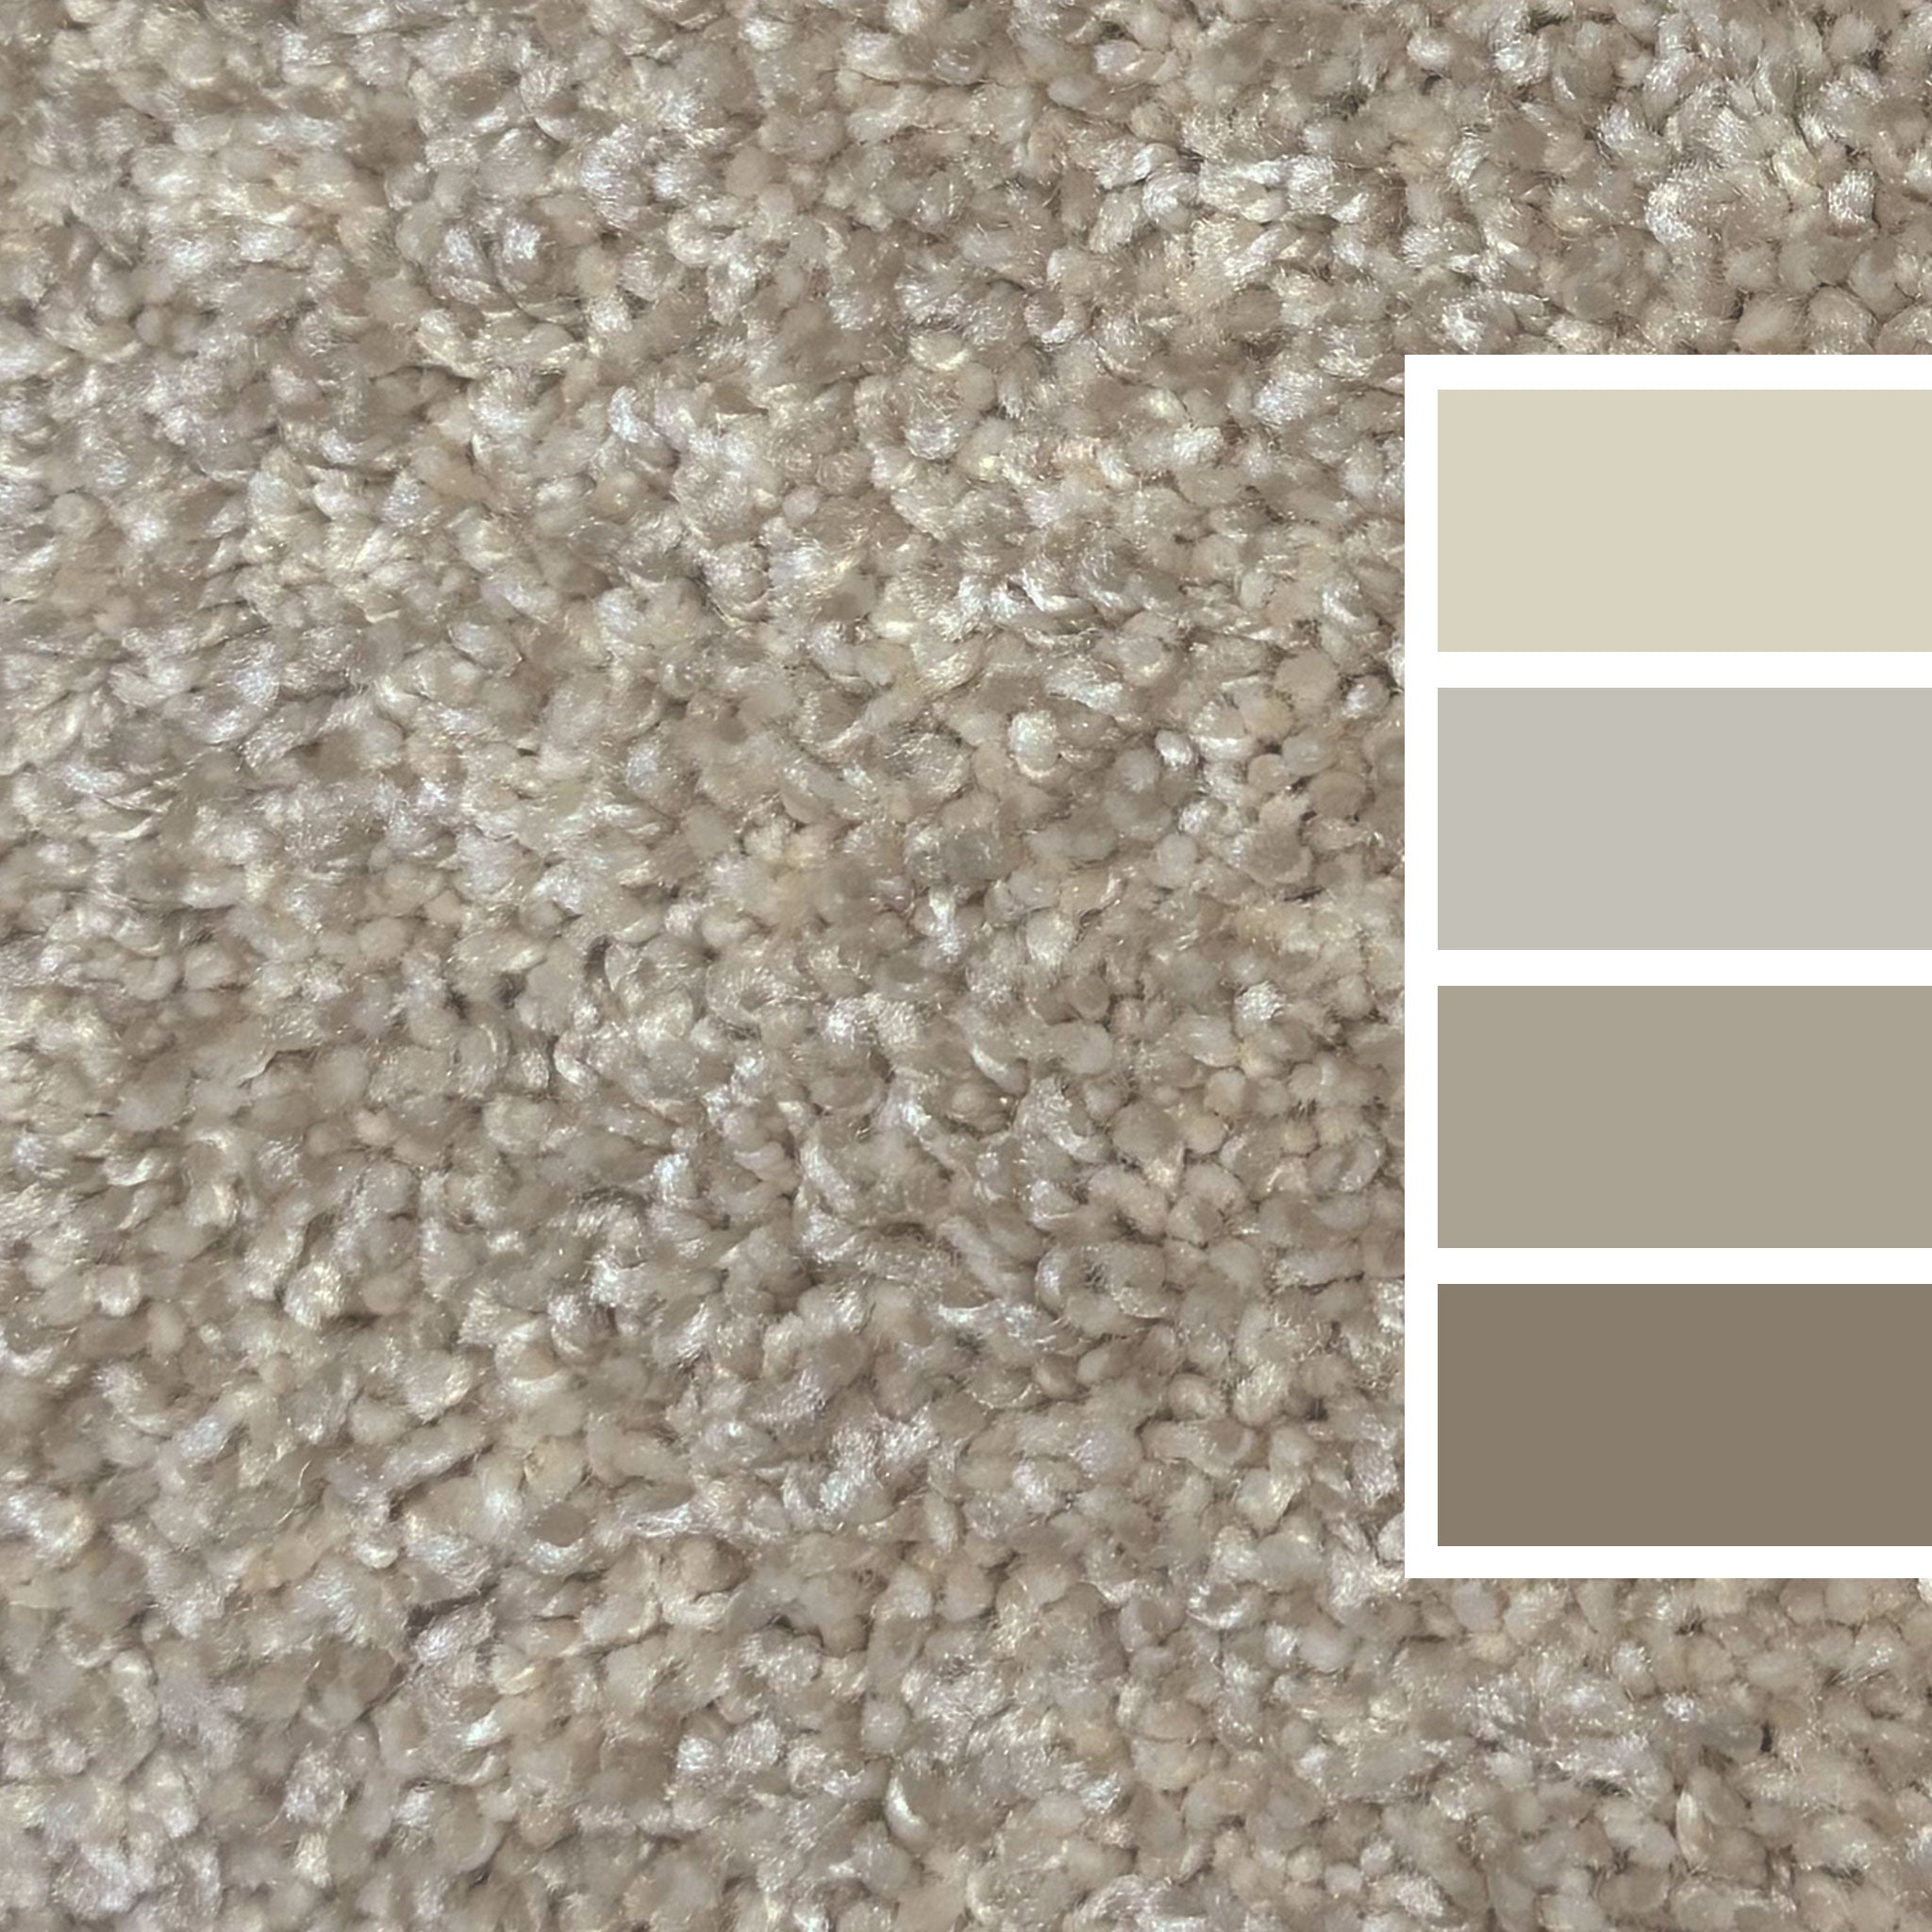 Nimbus, Gold Standard III, Carpet by Dreamweaver, Calhoun's Flooring Springfield, IL Color Swatch